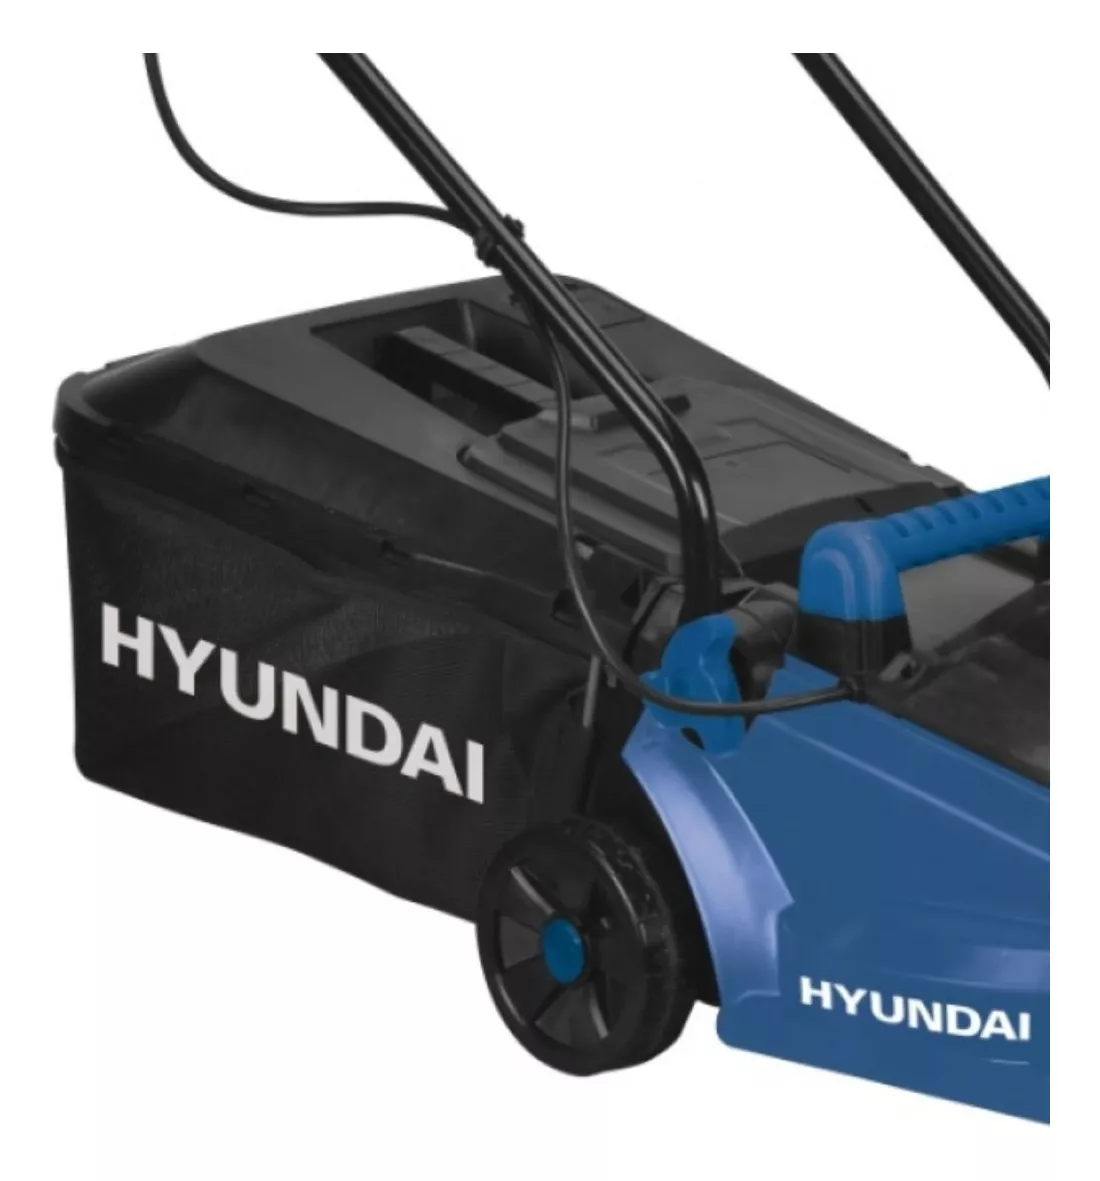 Tercera imagen para búsqueda de cortadora cesped hyundai